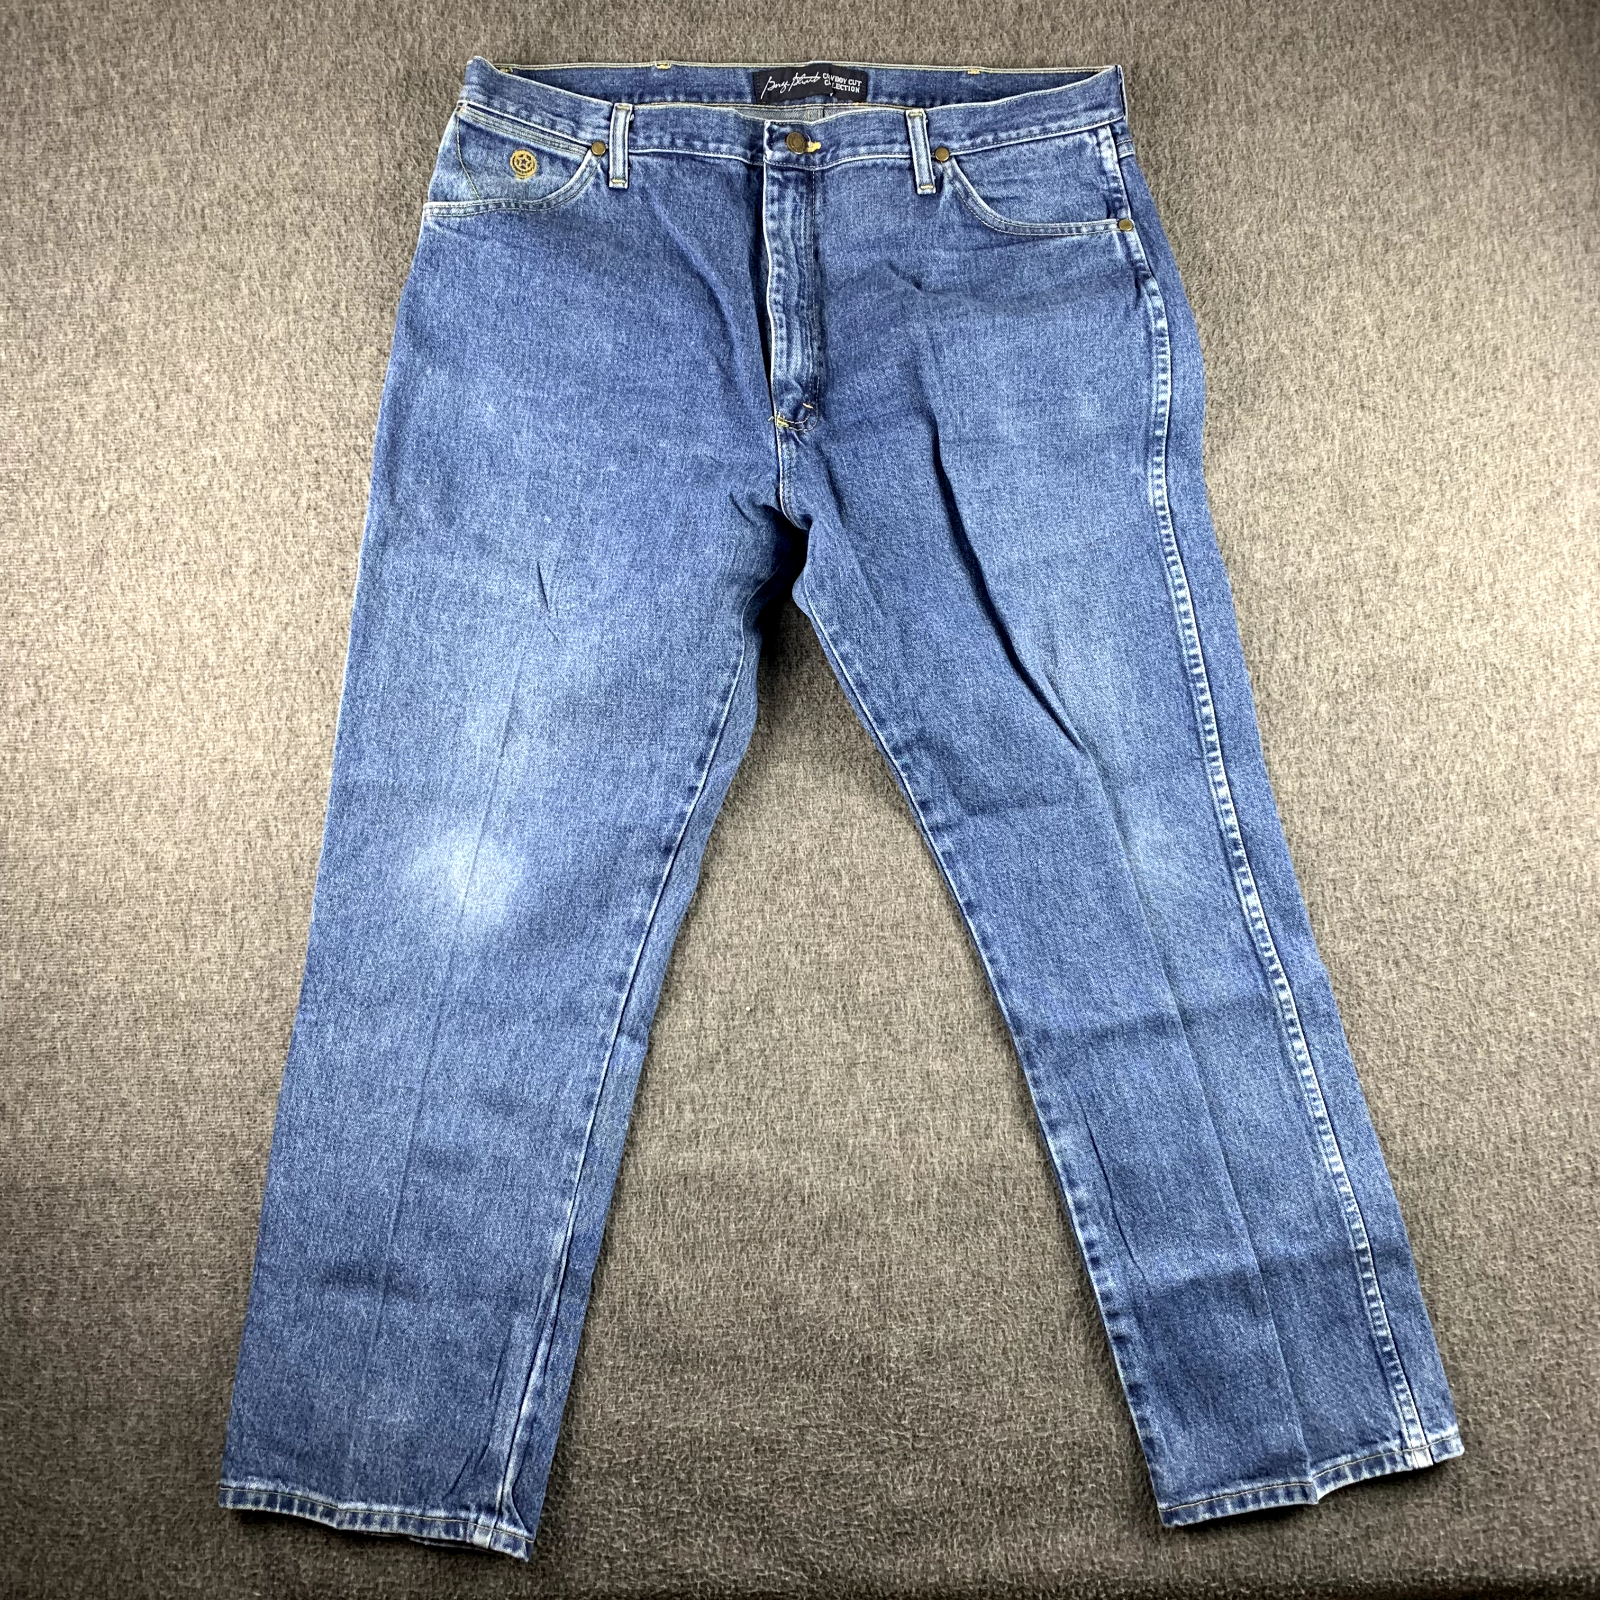 George Strait Wrangler Jeans Mens 40x30 Fits 38x30 Cowboy Cut Collection  Denim | eBay